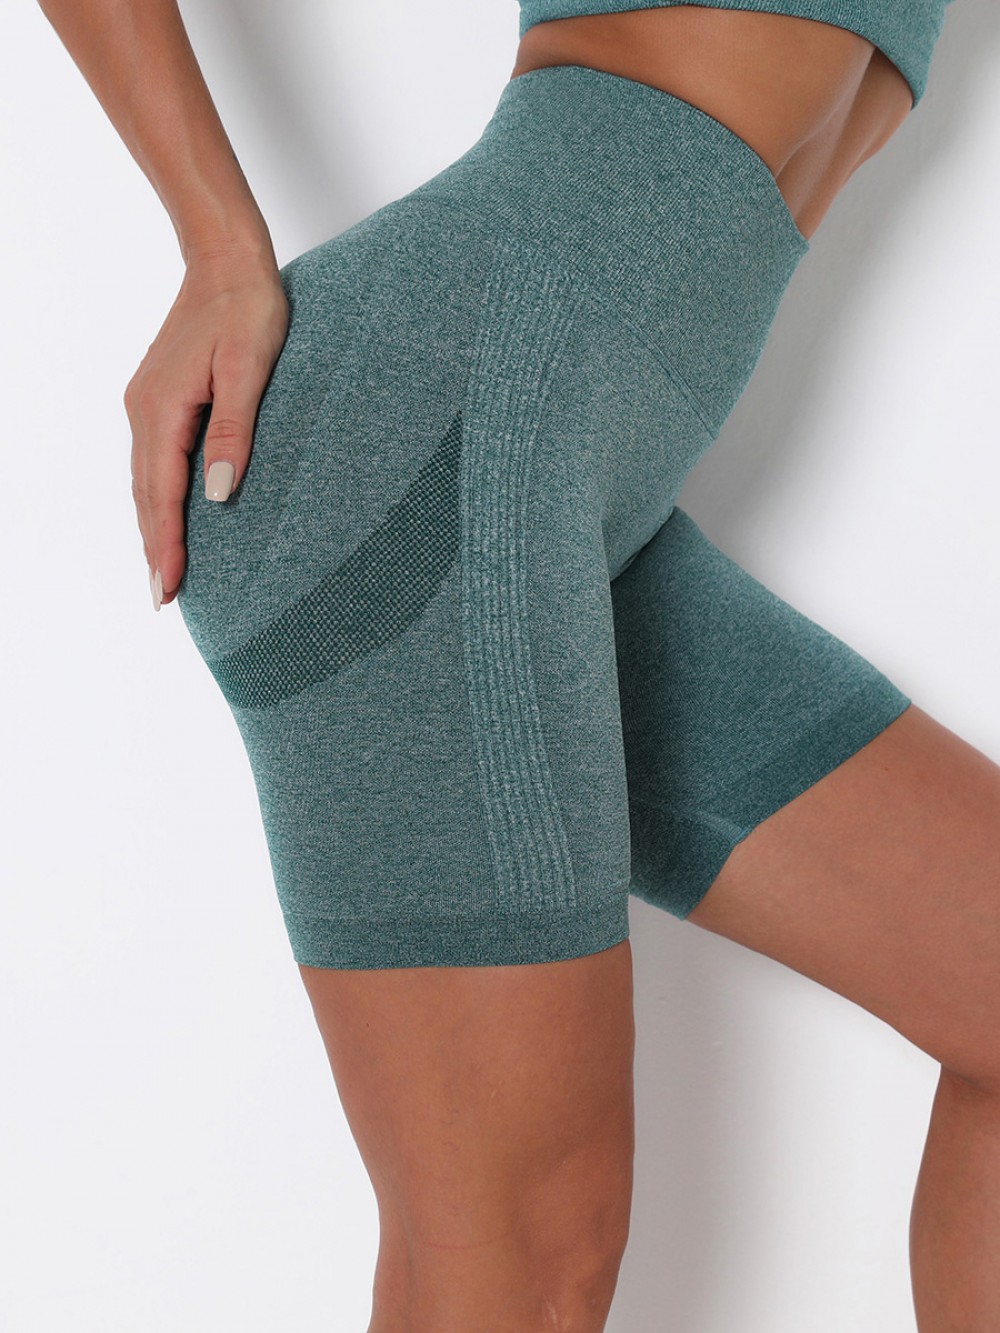 Green Knit High Waist Seamless Sports Shorts Women Fashion Style